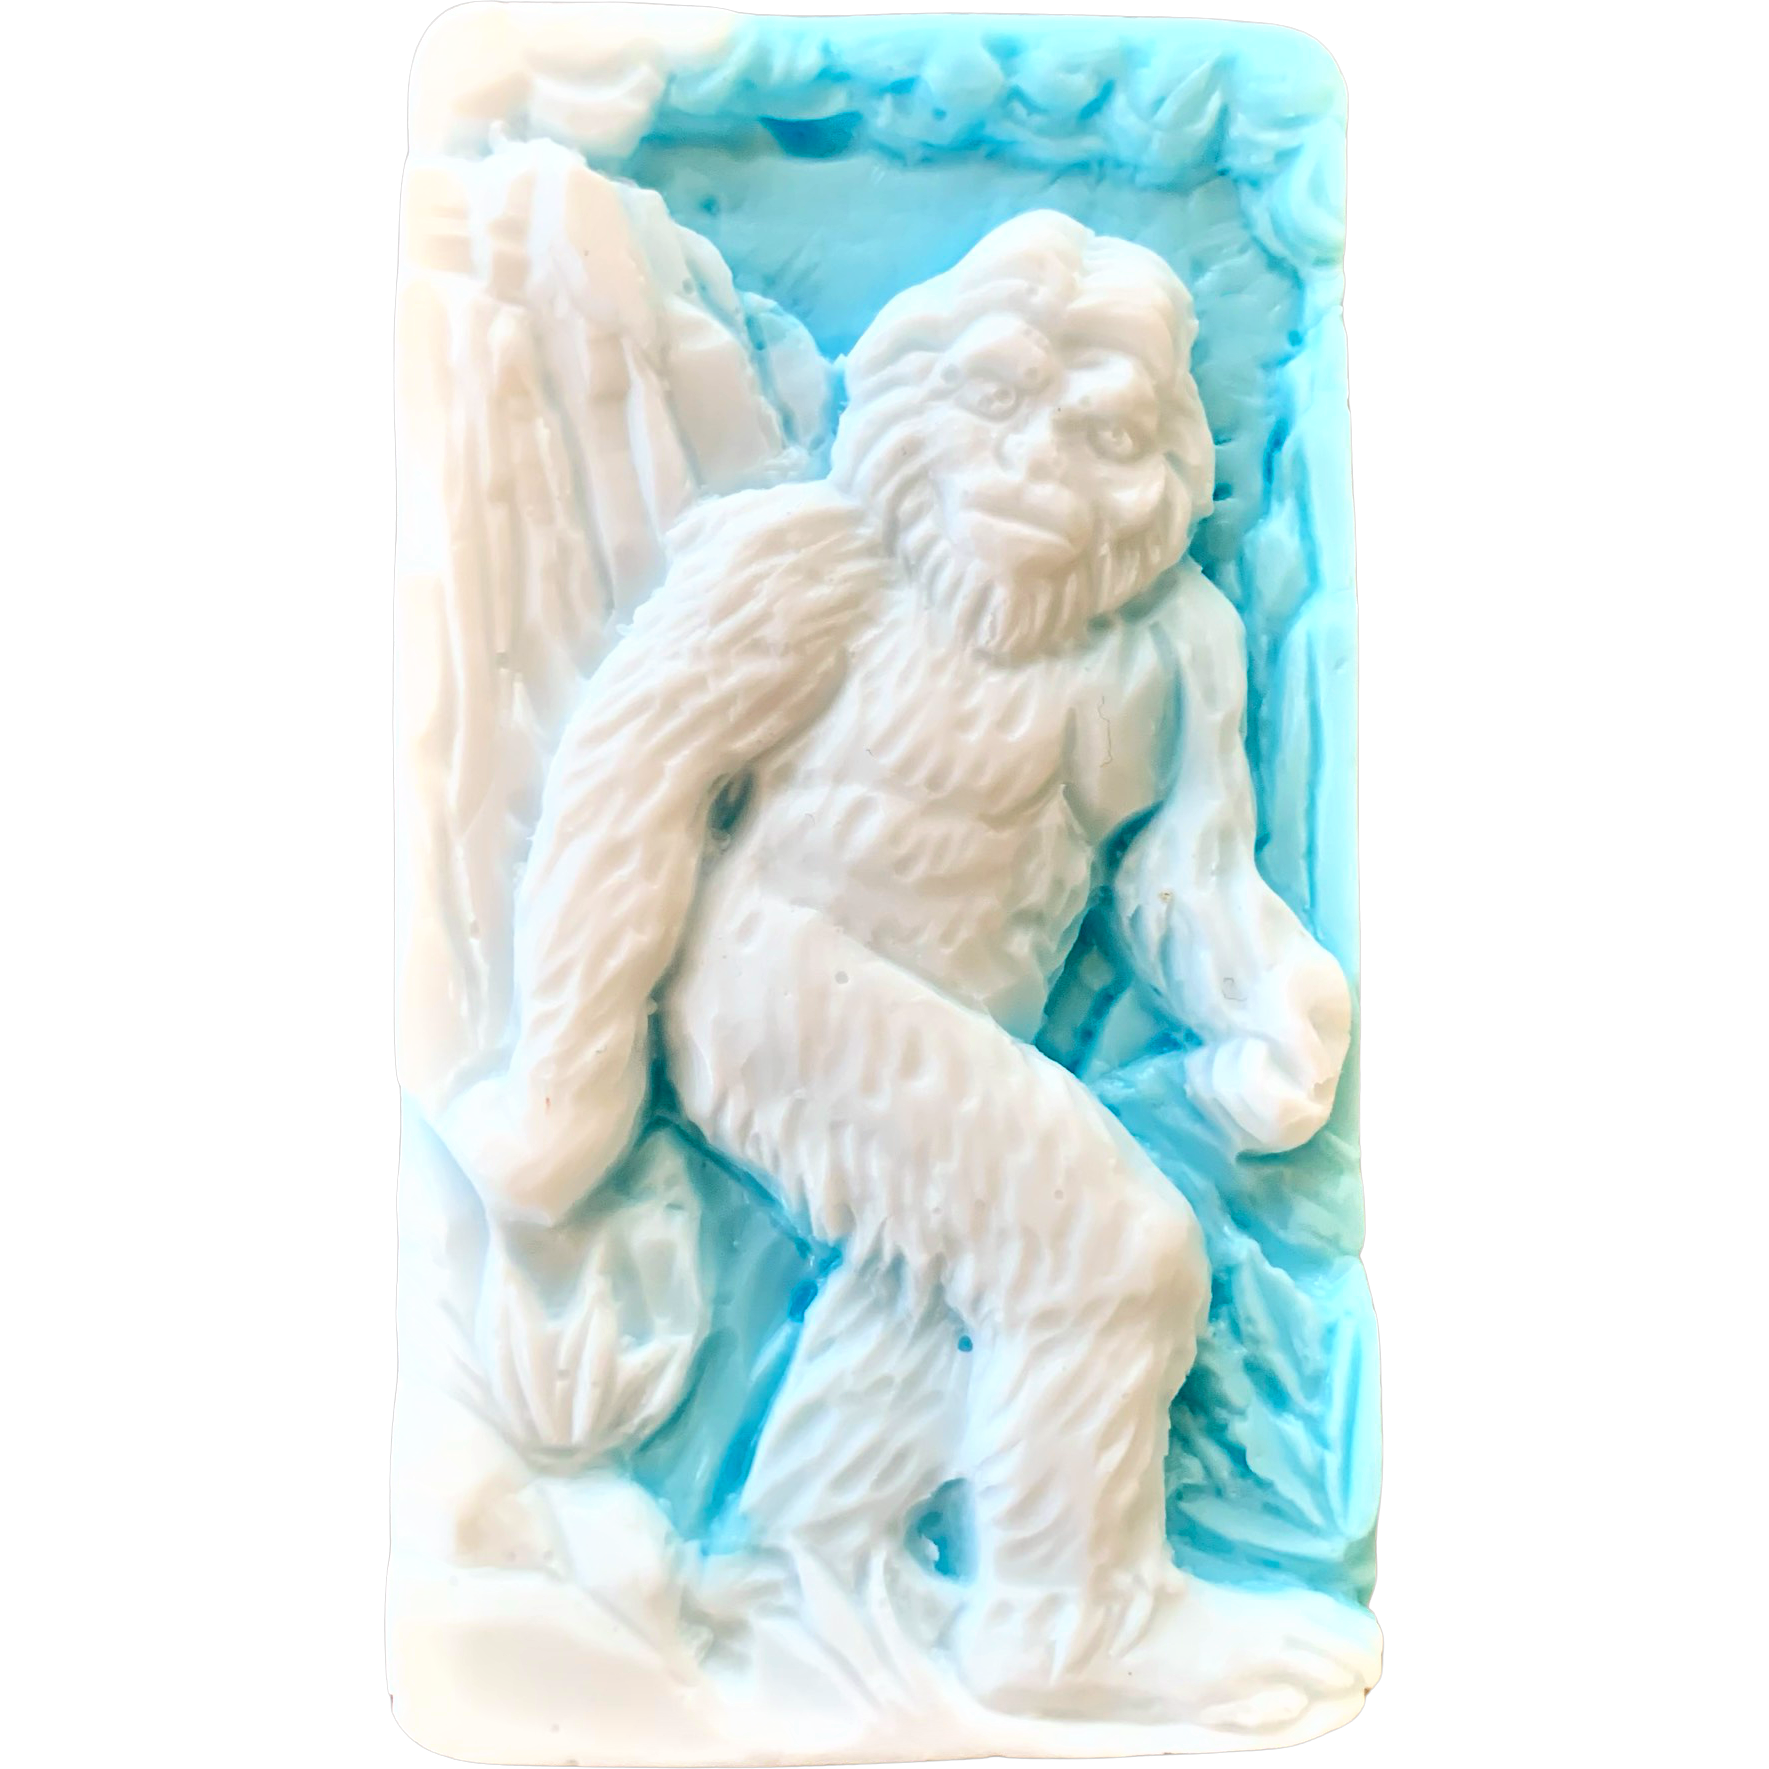 Yeti/Abominable Snowman Soap